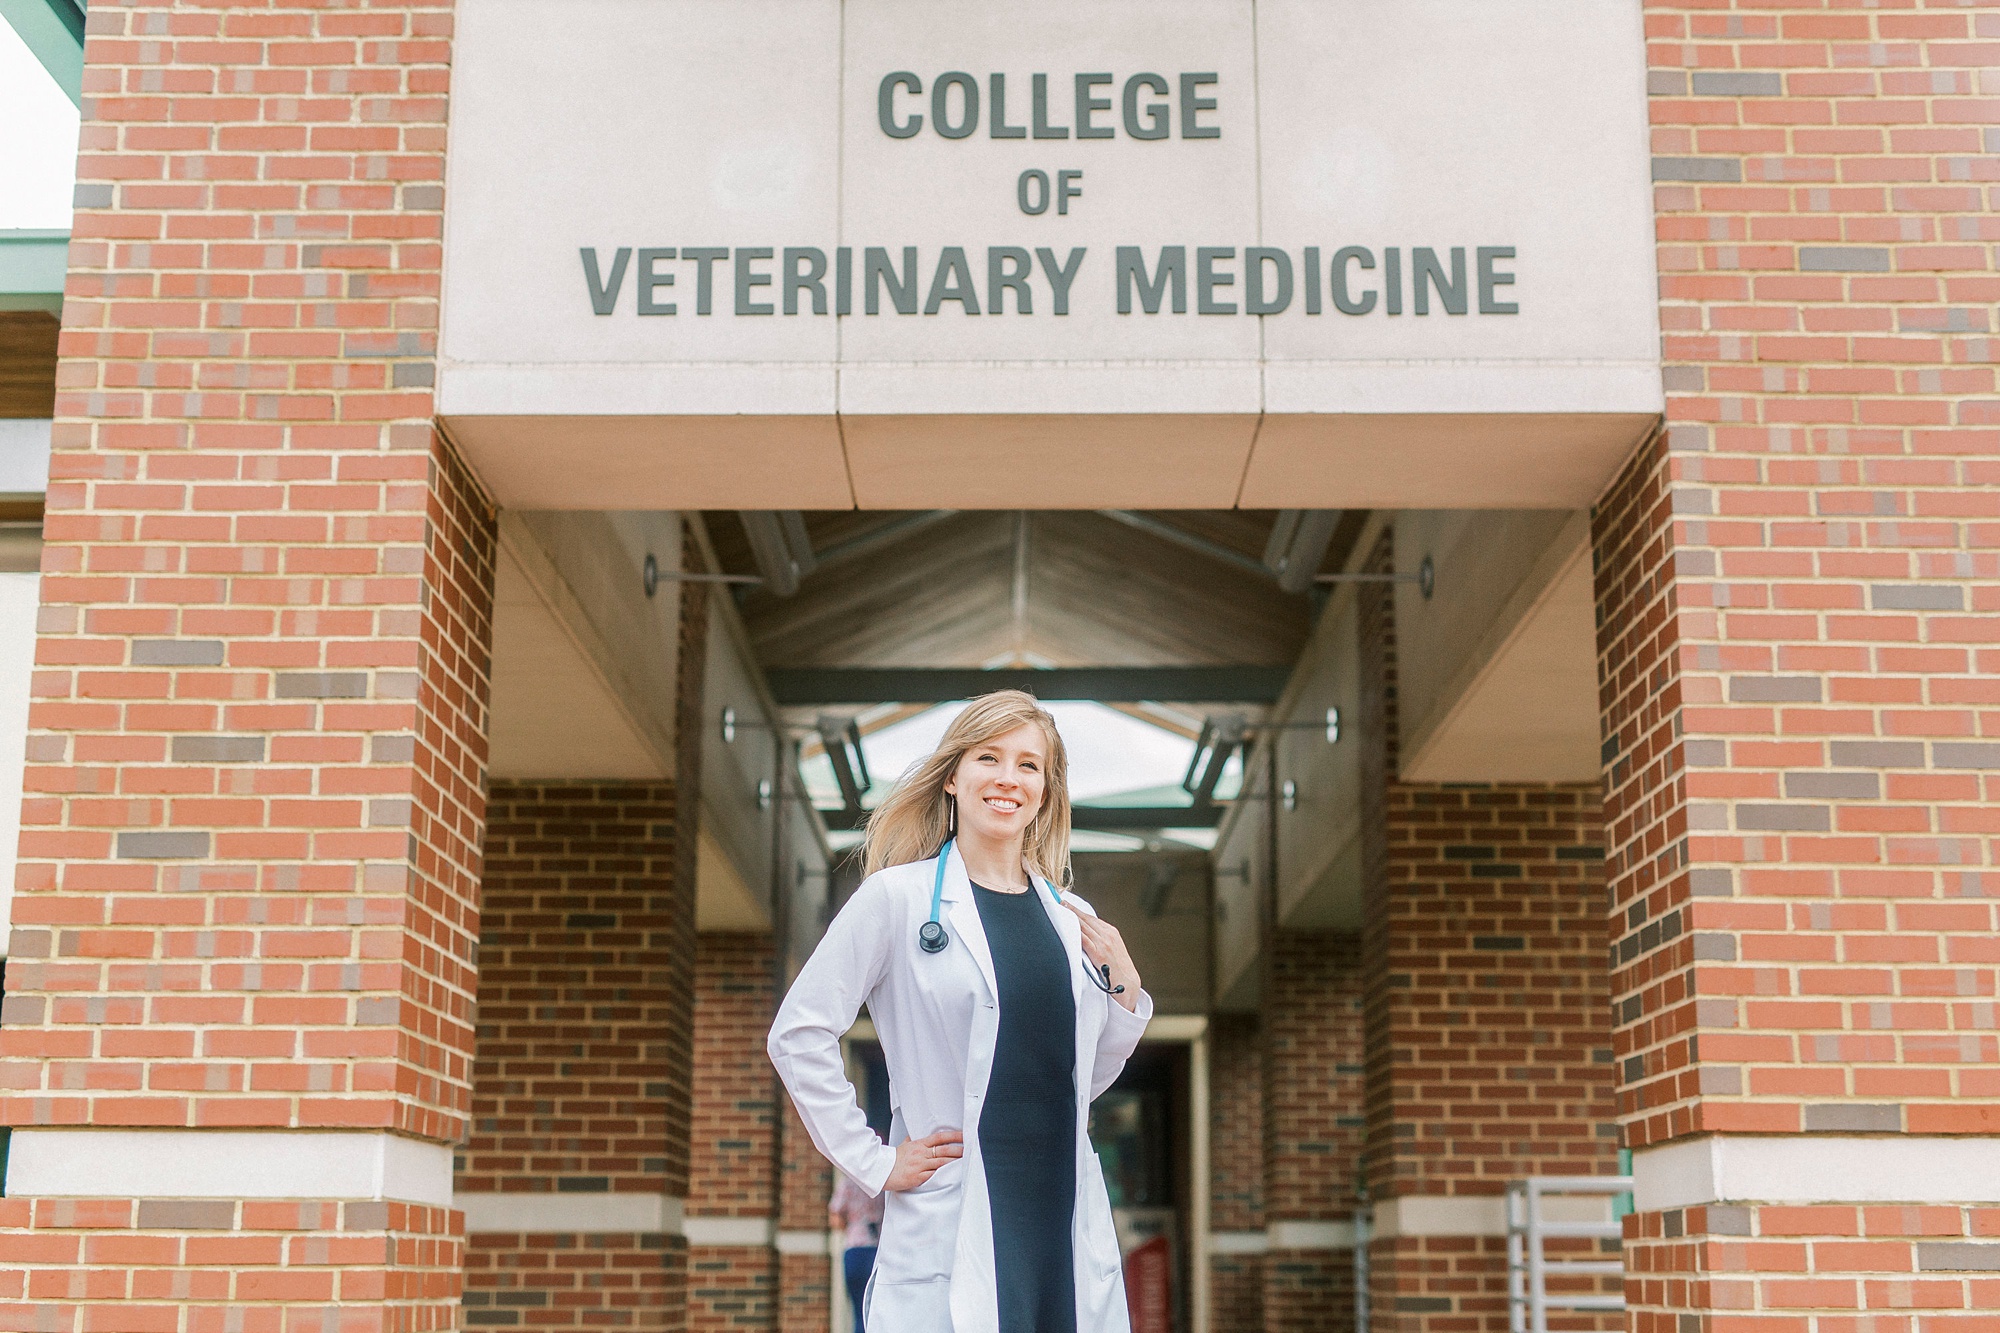 College of Veterinary Medicine senior portraits for student in white coat